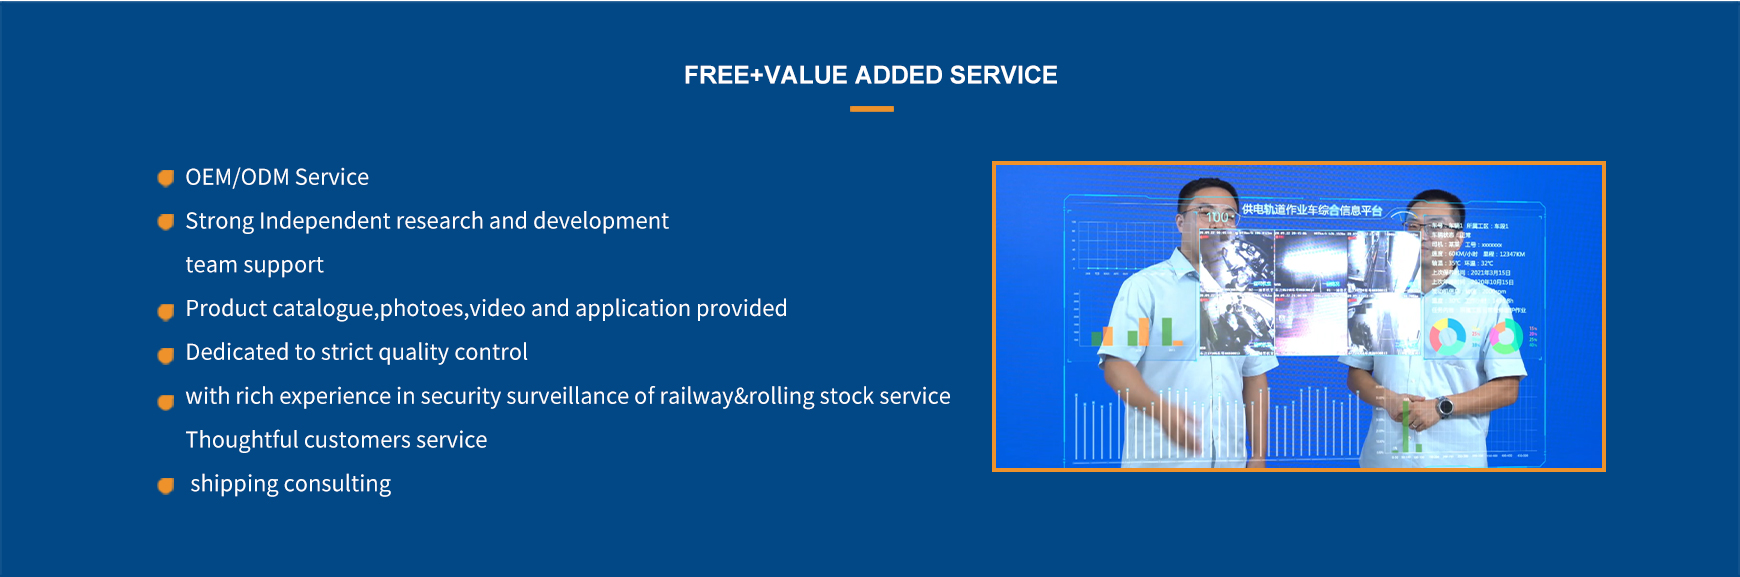 Free Valued  Added Service.jpg